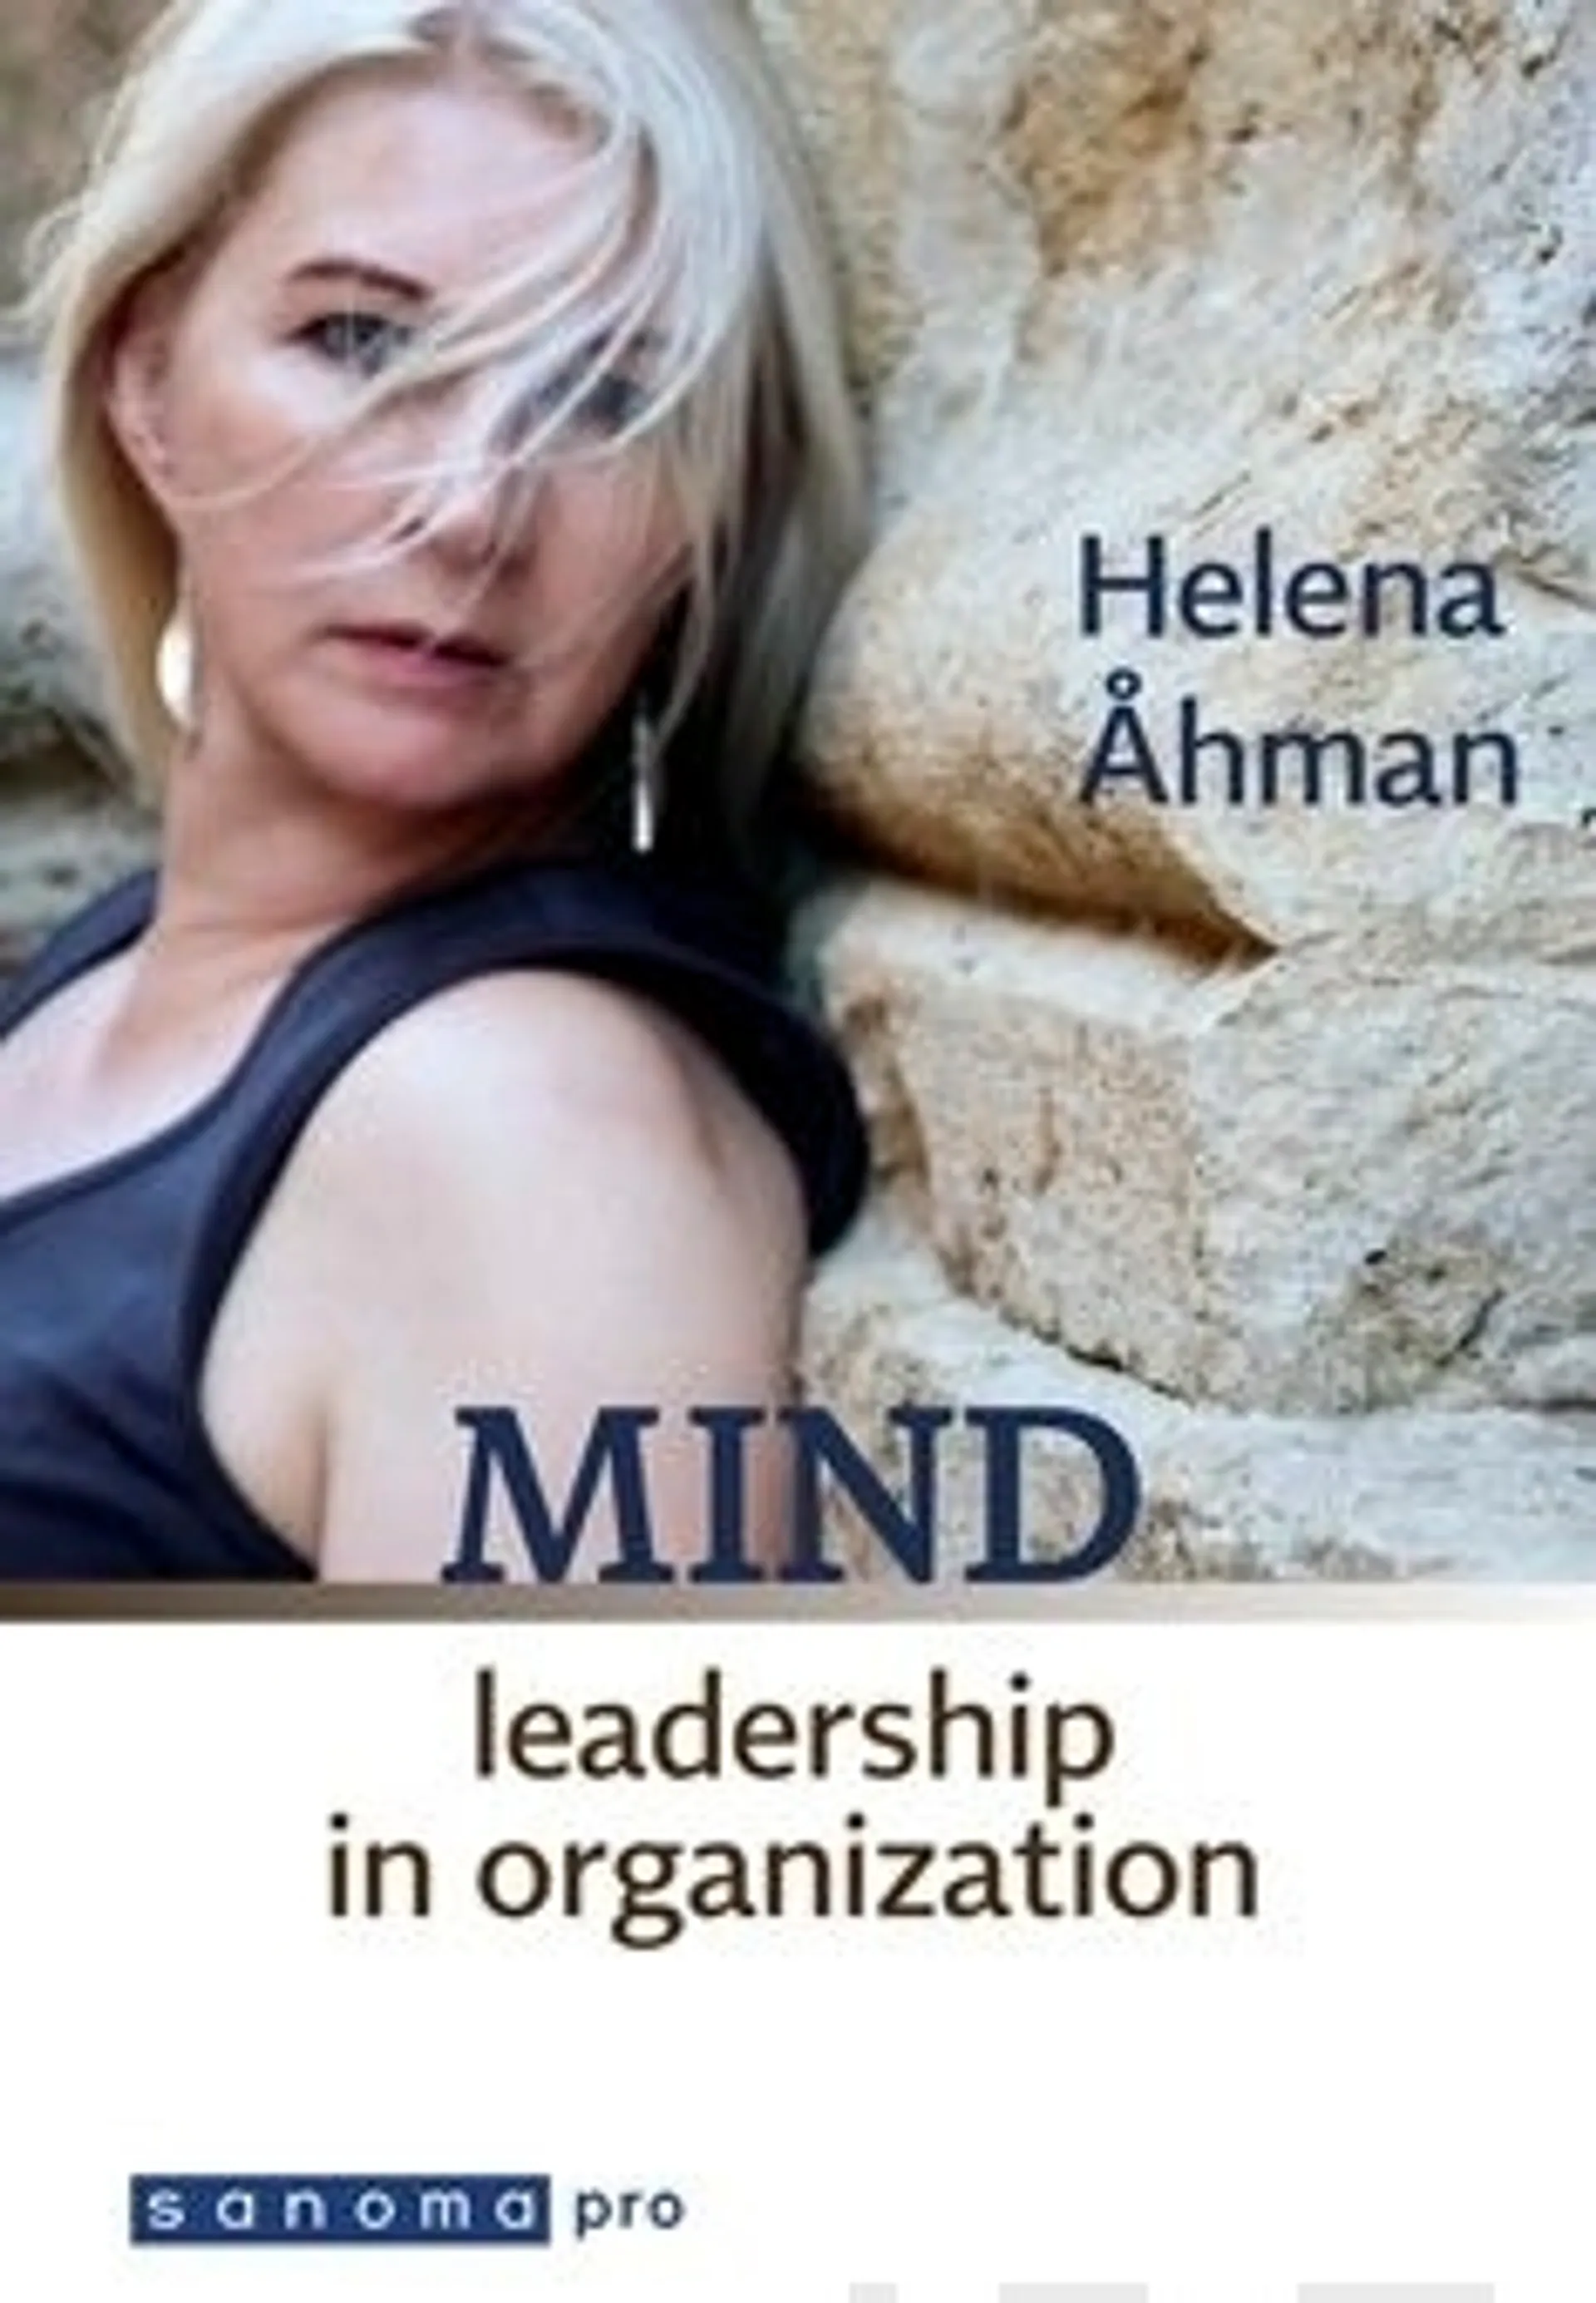 Åhman, Mind leadership in organization